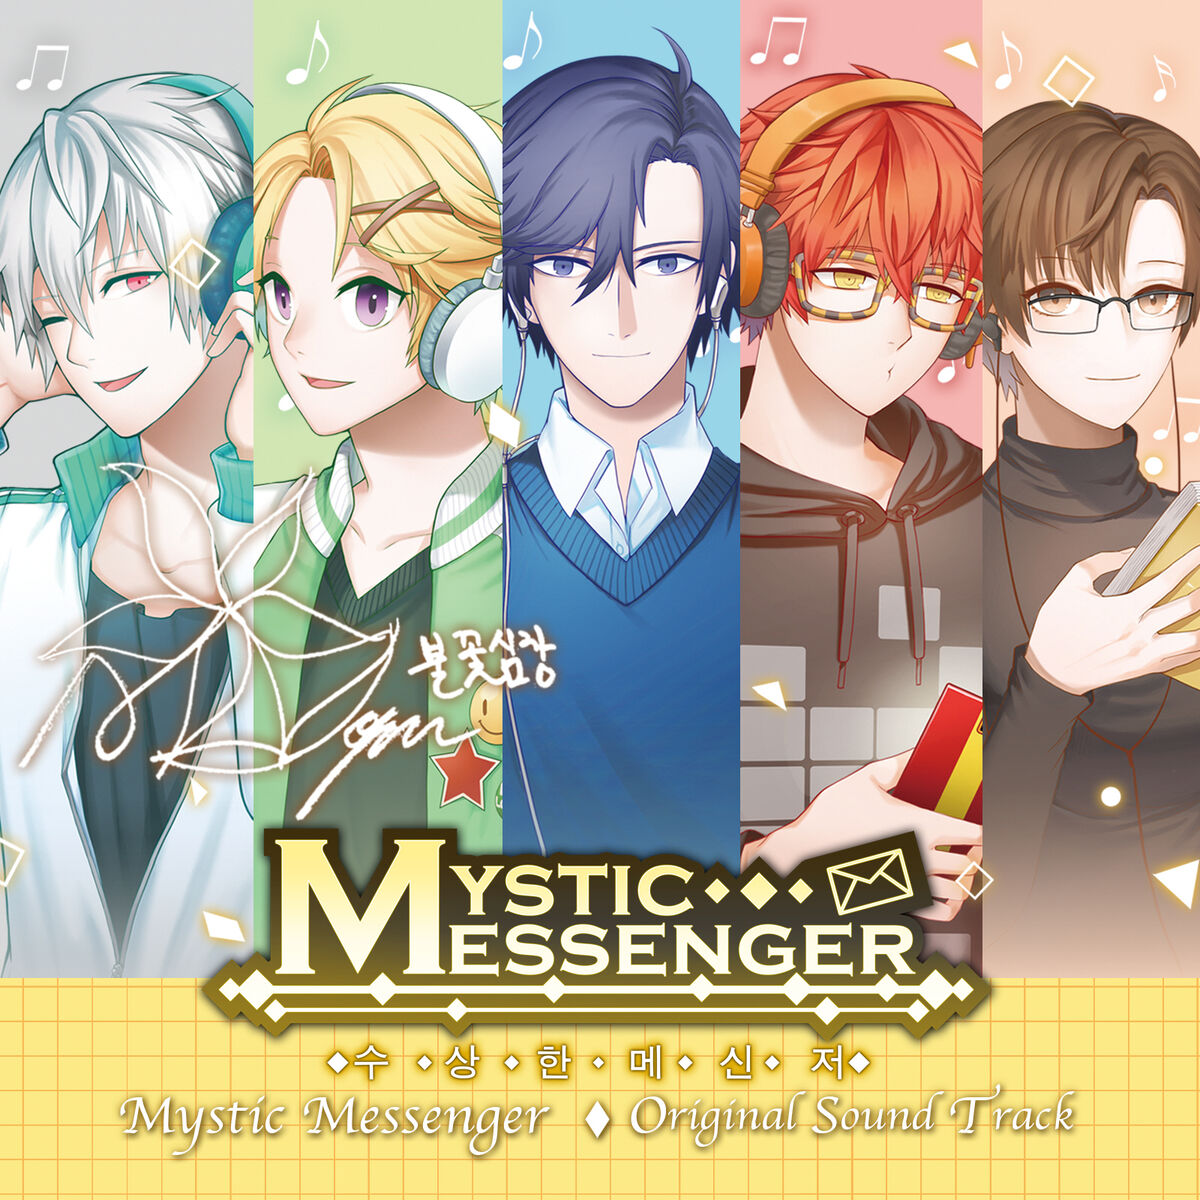 HD wallpaper Anime Mystic Messenger 707 Mystic Messenger  Wallpaper  Flare